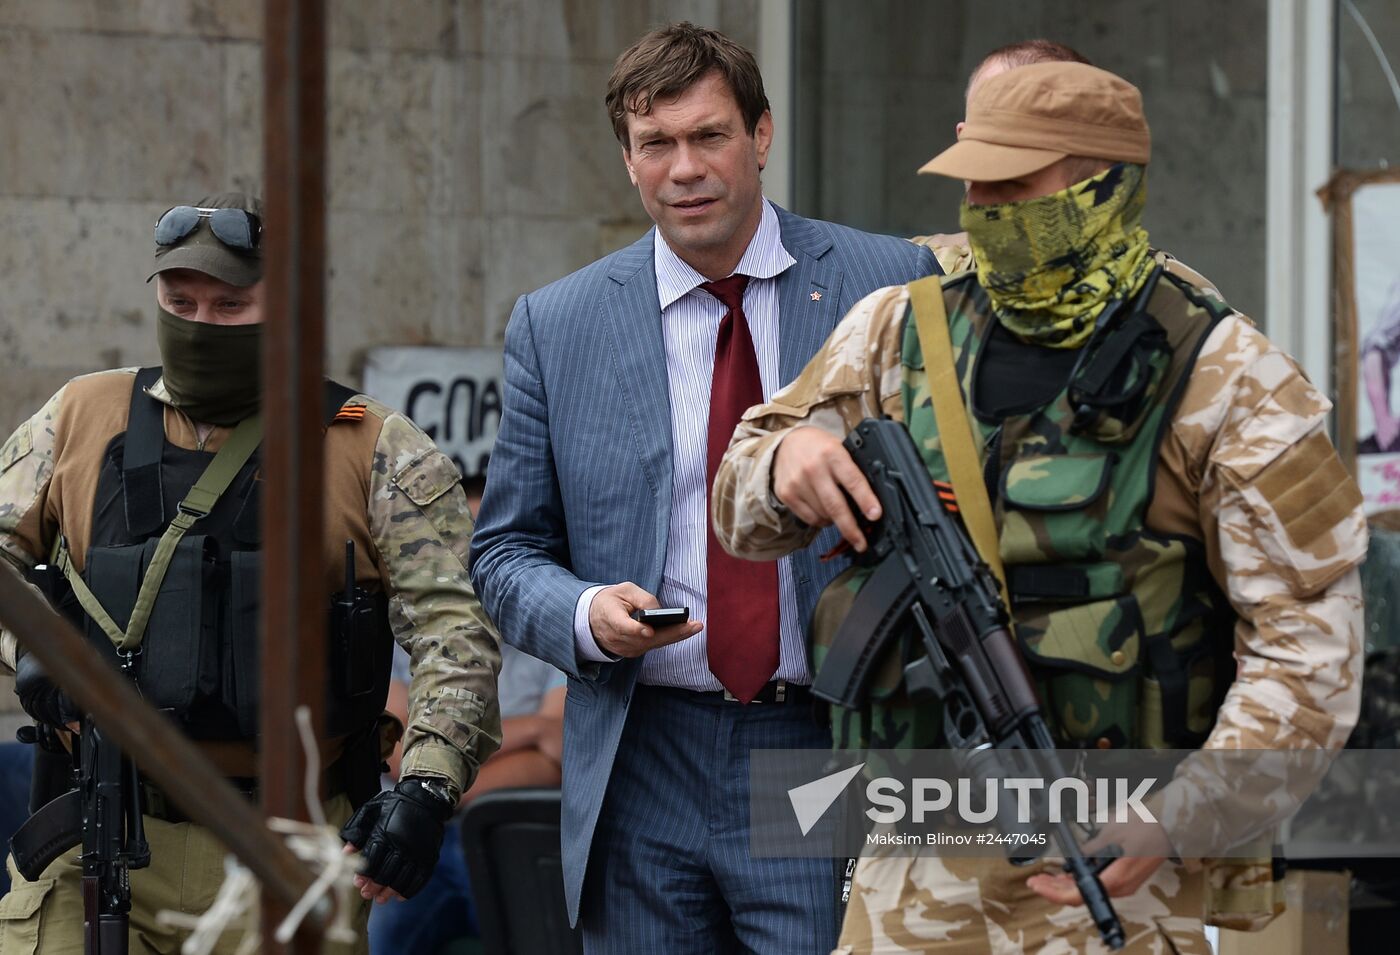 Briefing of Oleg Tsarev and Alexander Boroday in Donetsk